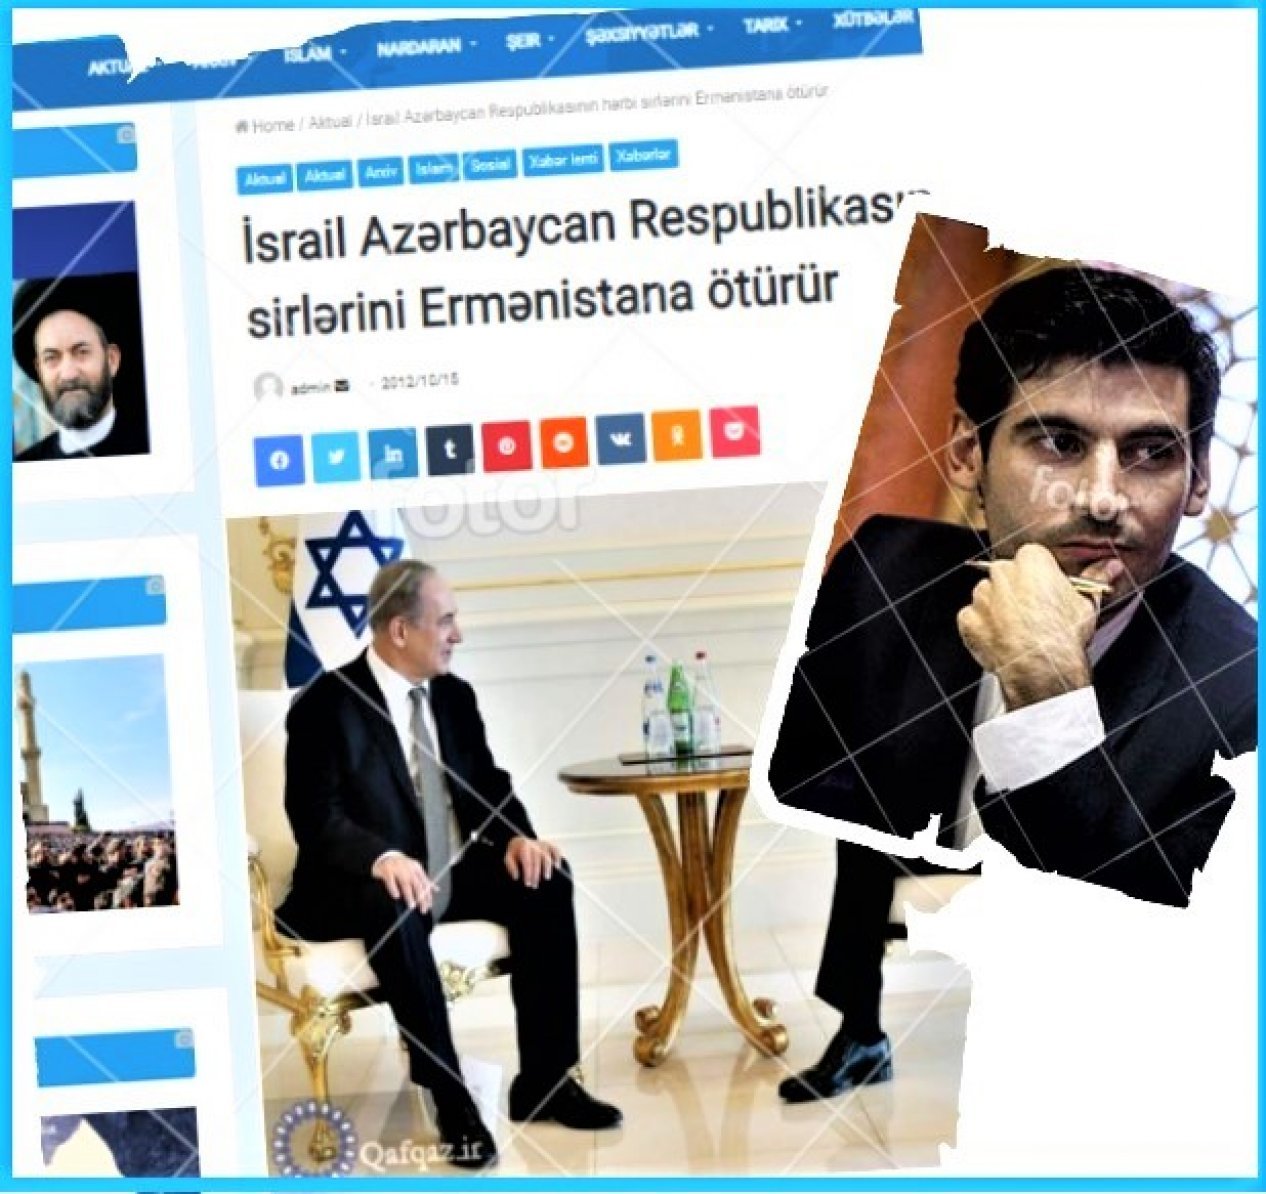 Did Israel hand over military information regarding Azerbaijan to Armenia?